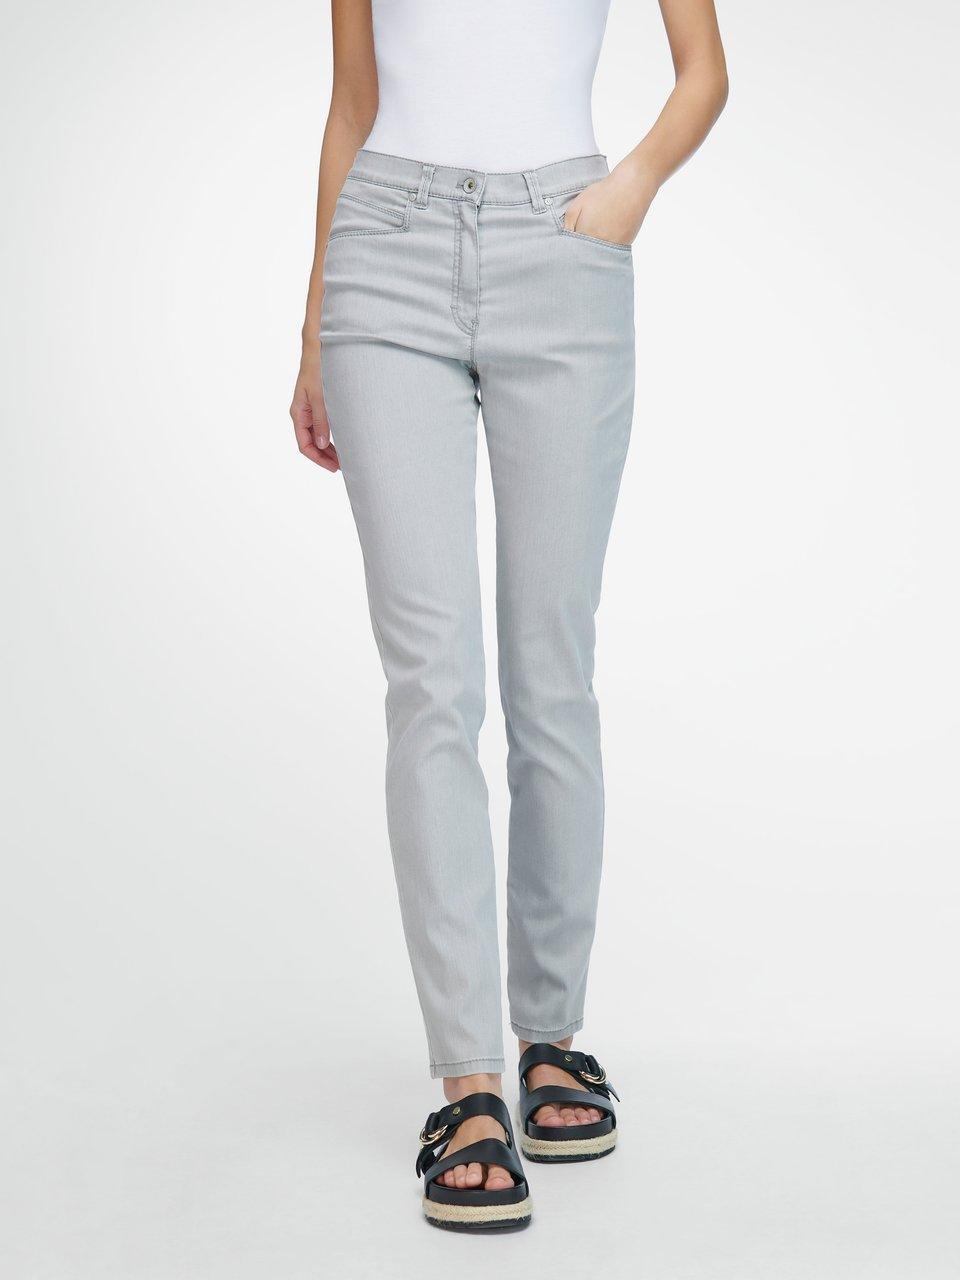 Raphaela by Brax - ProForm S Super Slim jeans model Lea